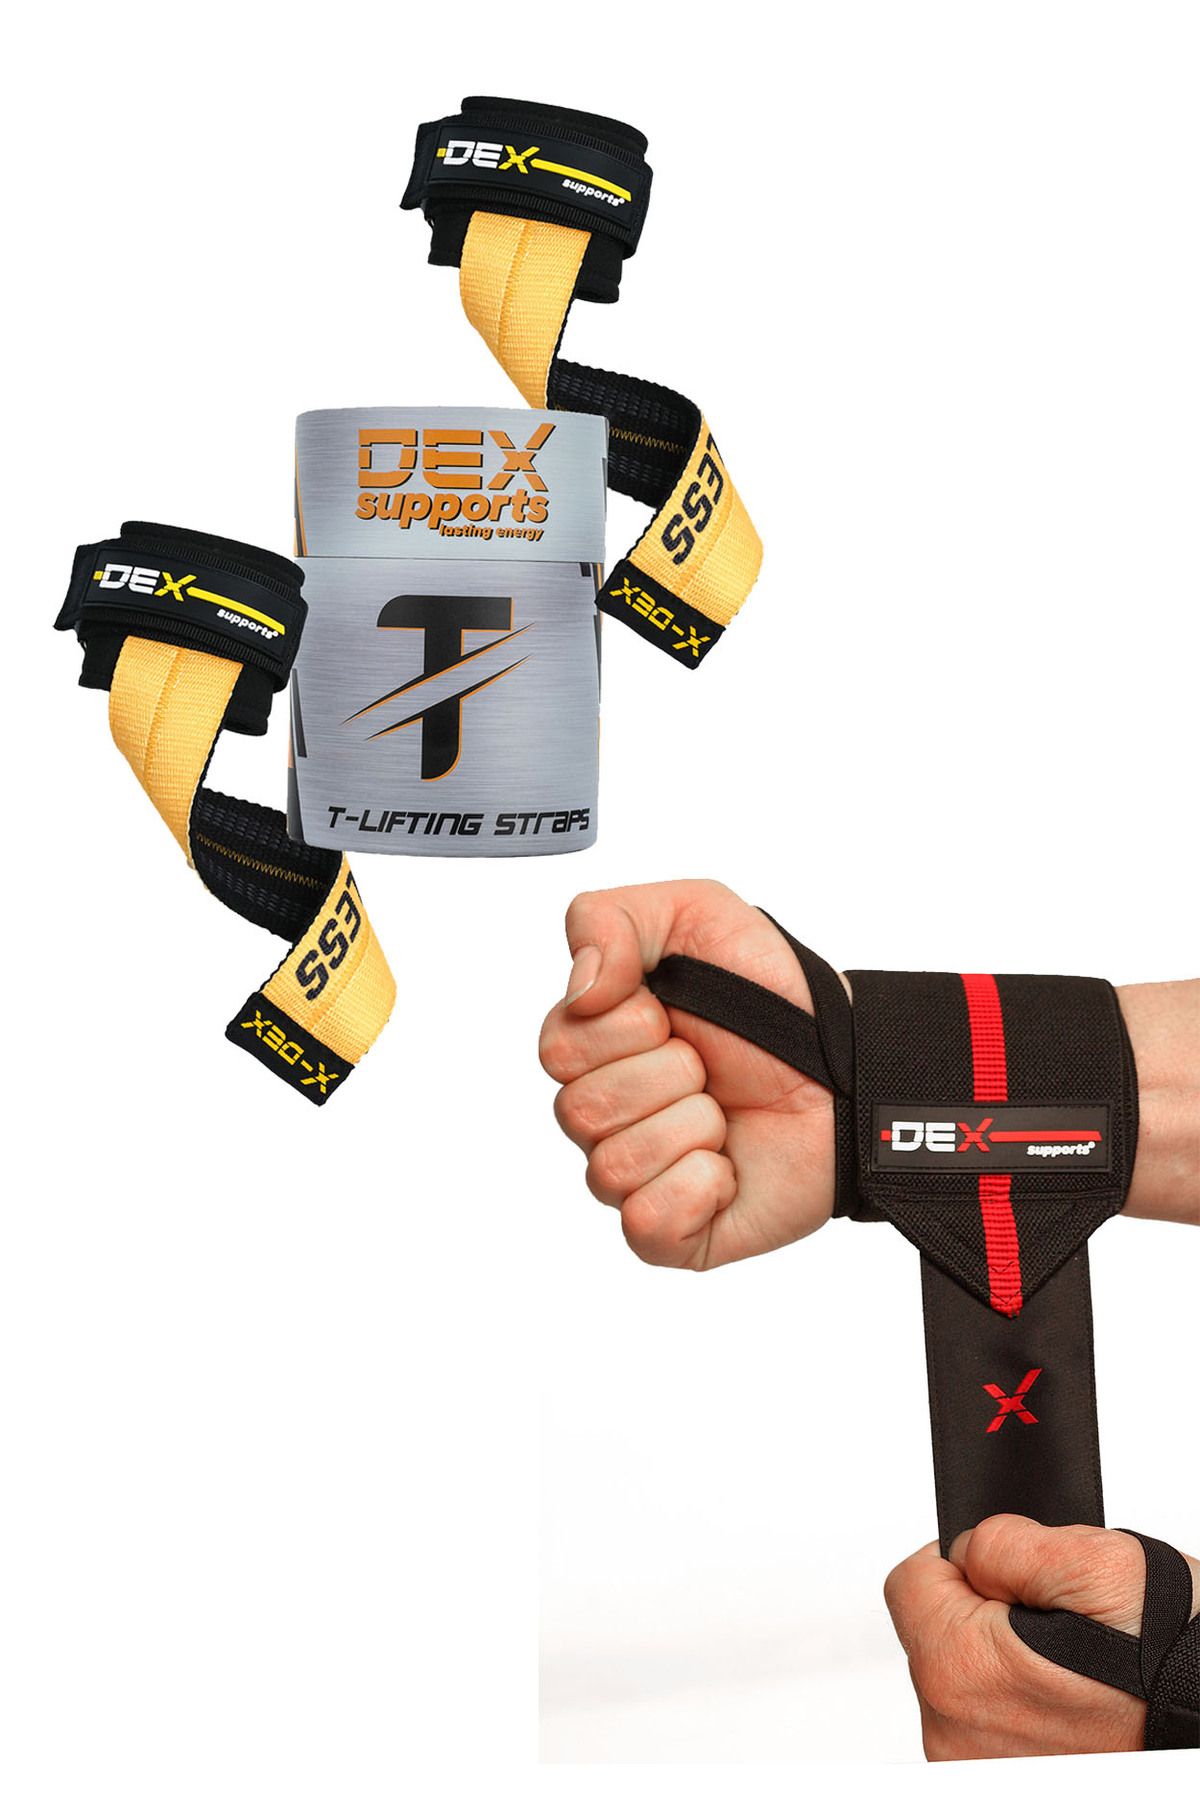 Dex Supports Lasting Energy Fitness Spor Bileklik Wrist Wraps + Halter Kayışı Lifting Straps T-GRİPS 2'Lİ Set